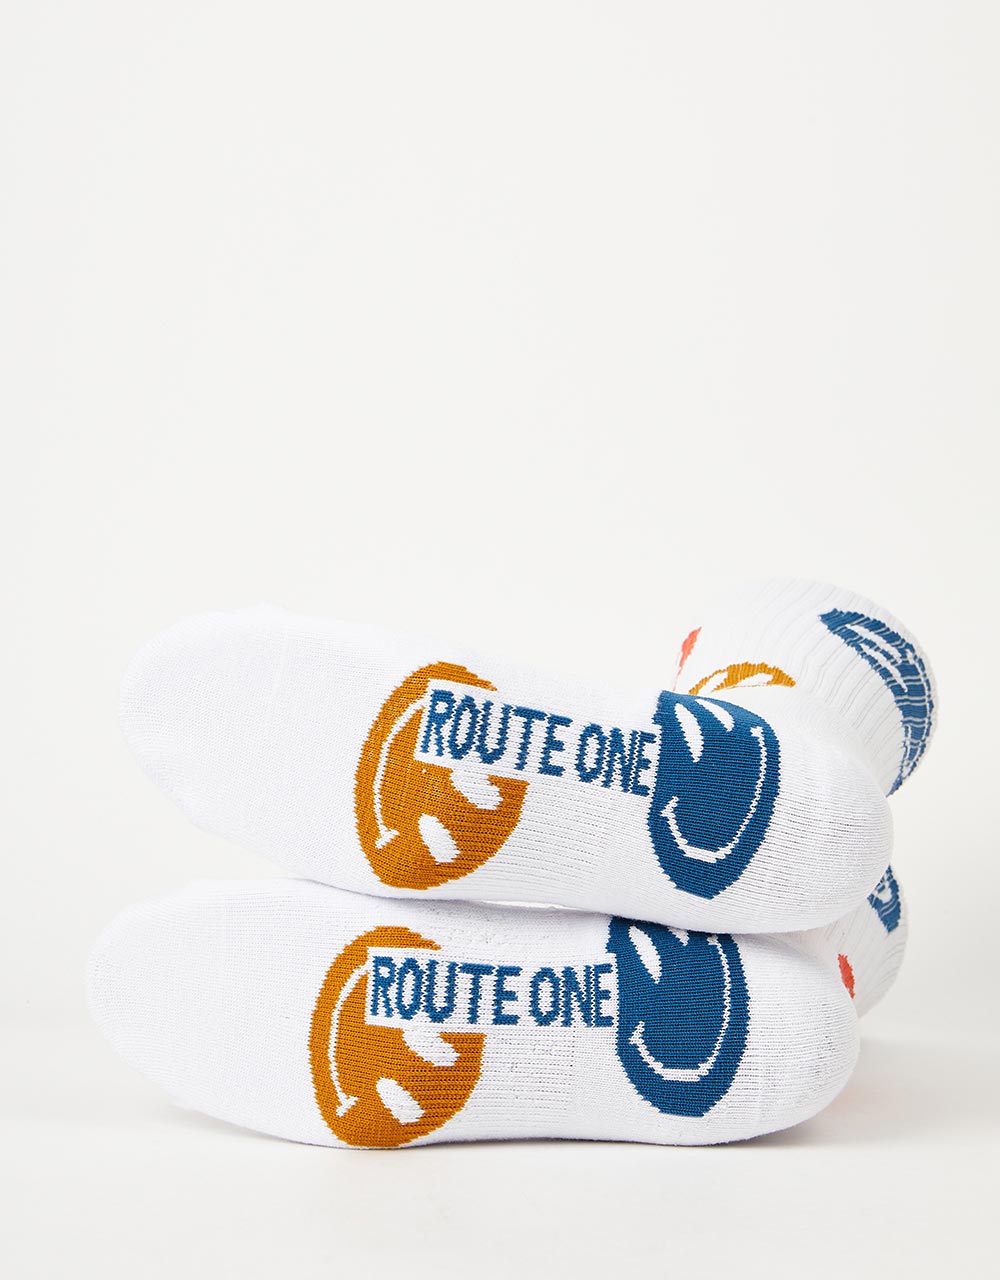 Route One Smiley Socks - White